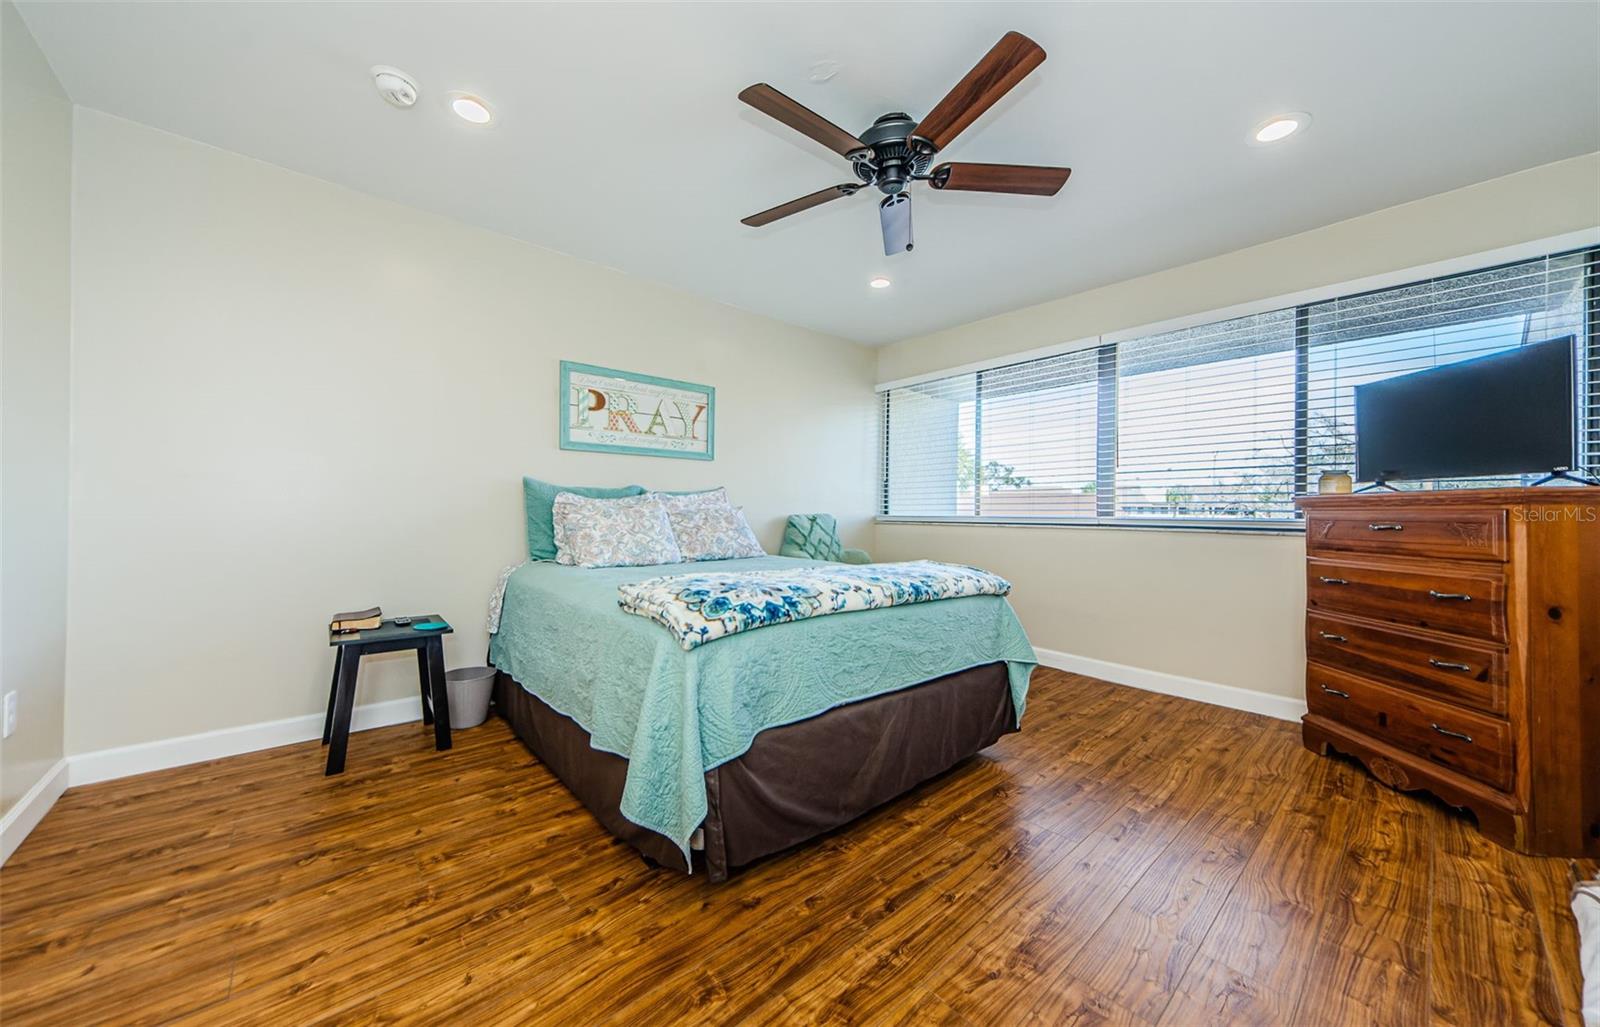 Spacious bedroom has ceiling fan, recessed lighting, wall of windows and beautiful plank laminate flooring